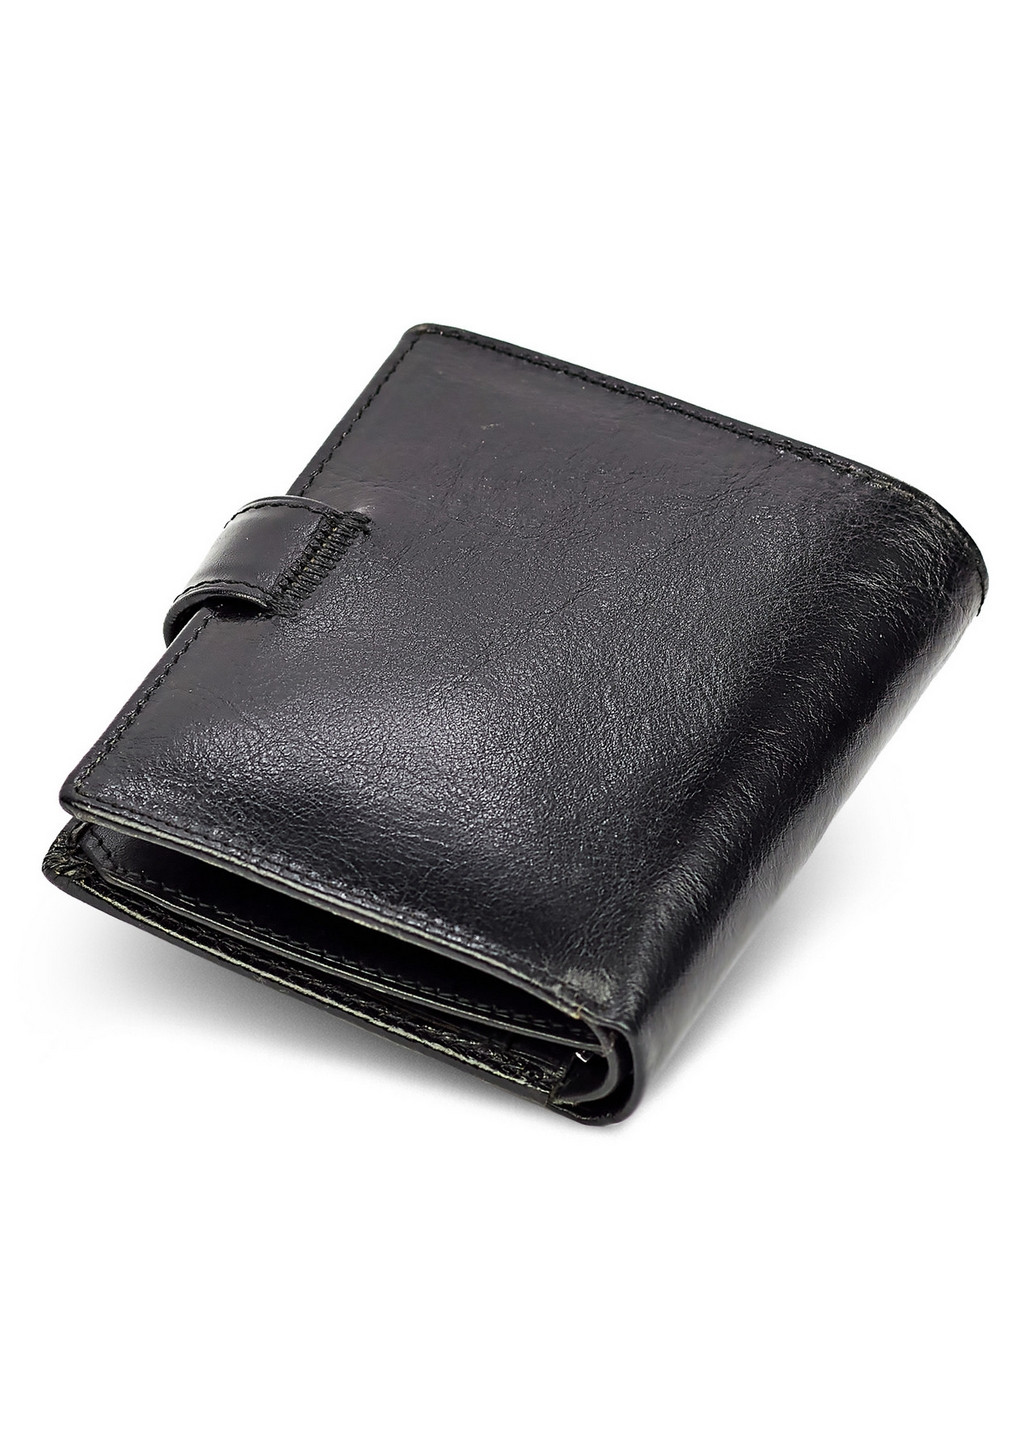 Кожаное мужское портмоне ST Leather Accessories (277692372)